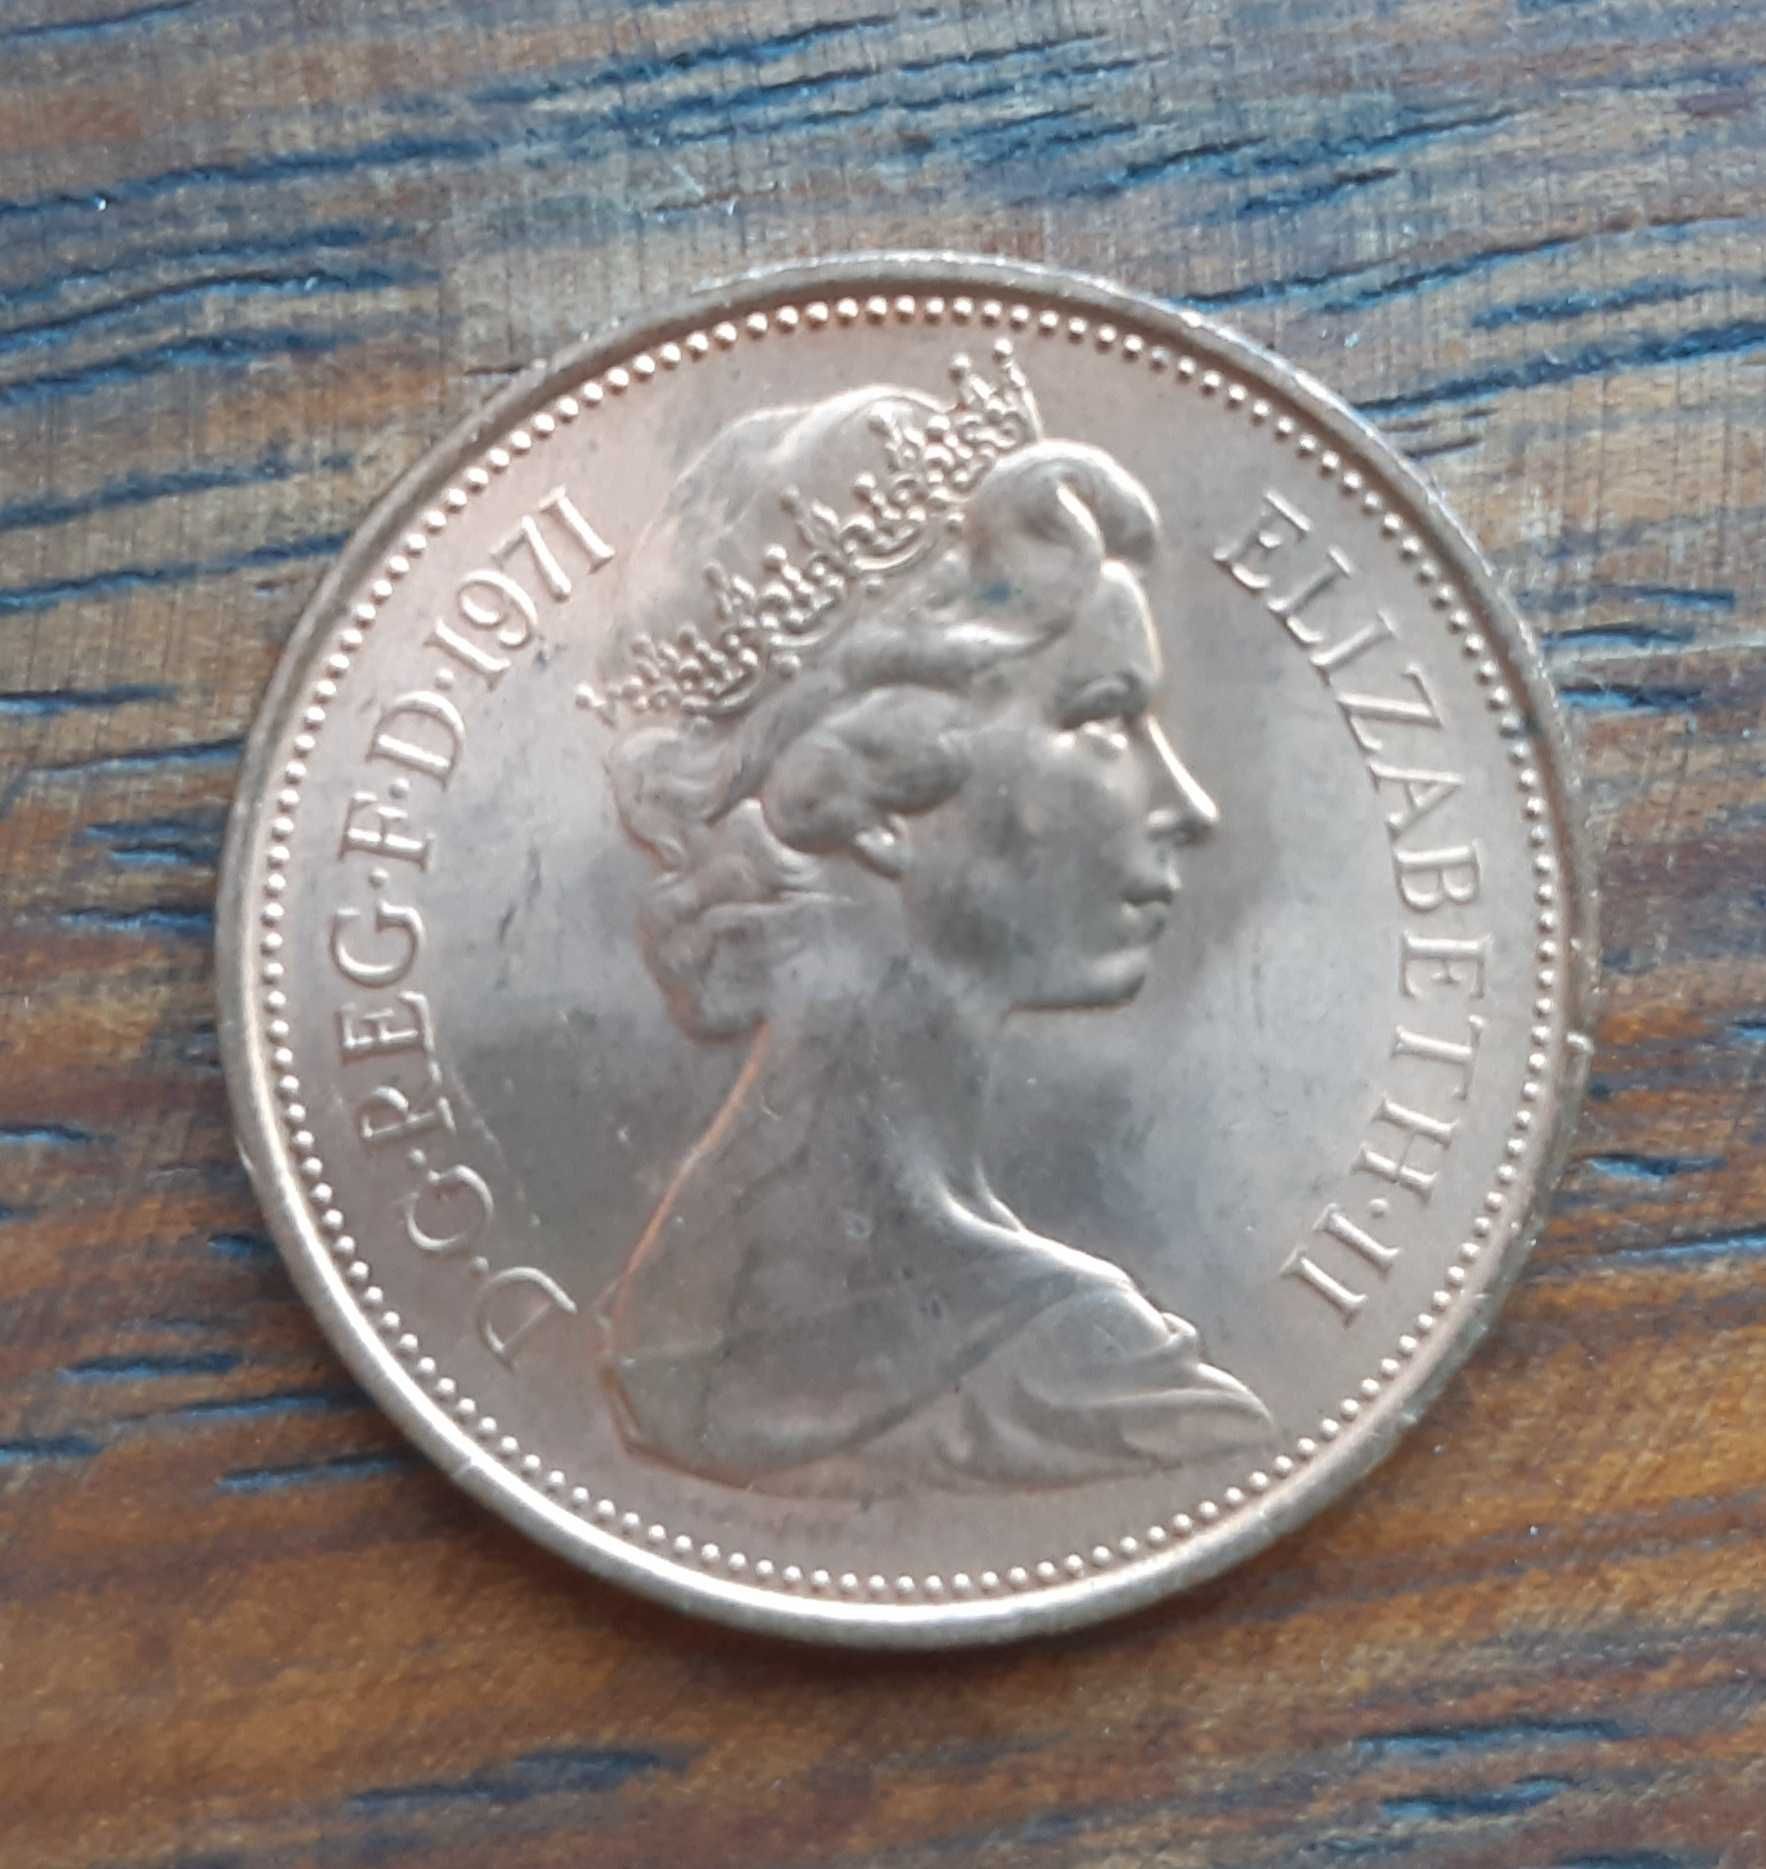 1971 New Pence 2p British Elizabeth II Coin